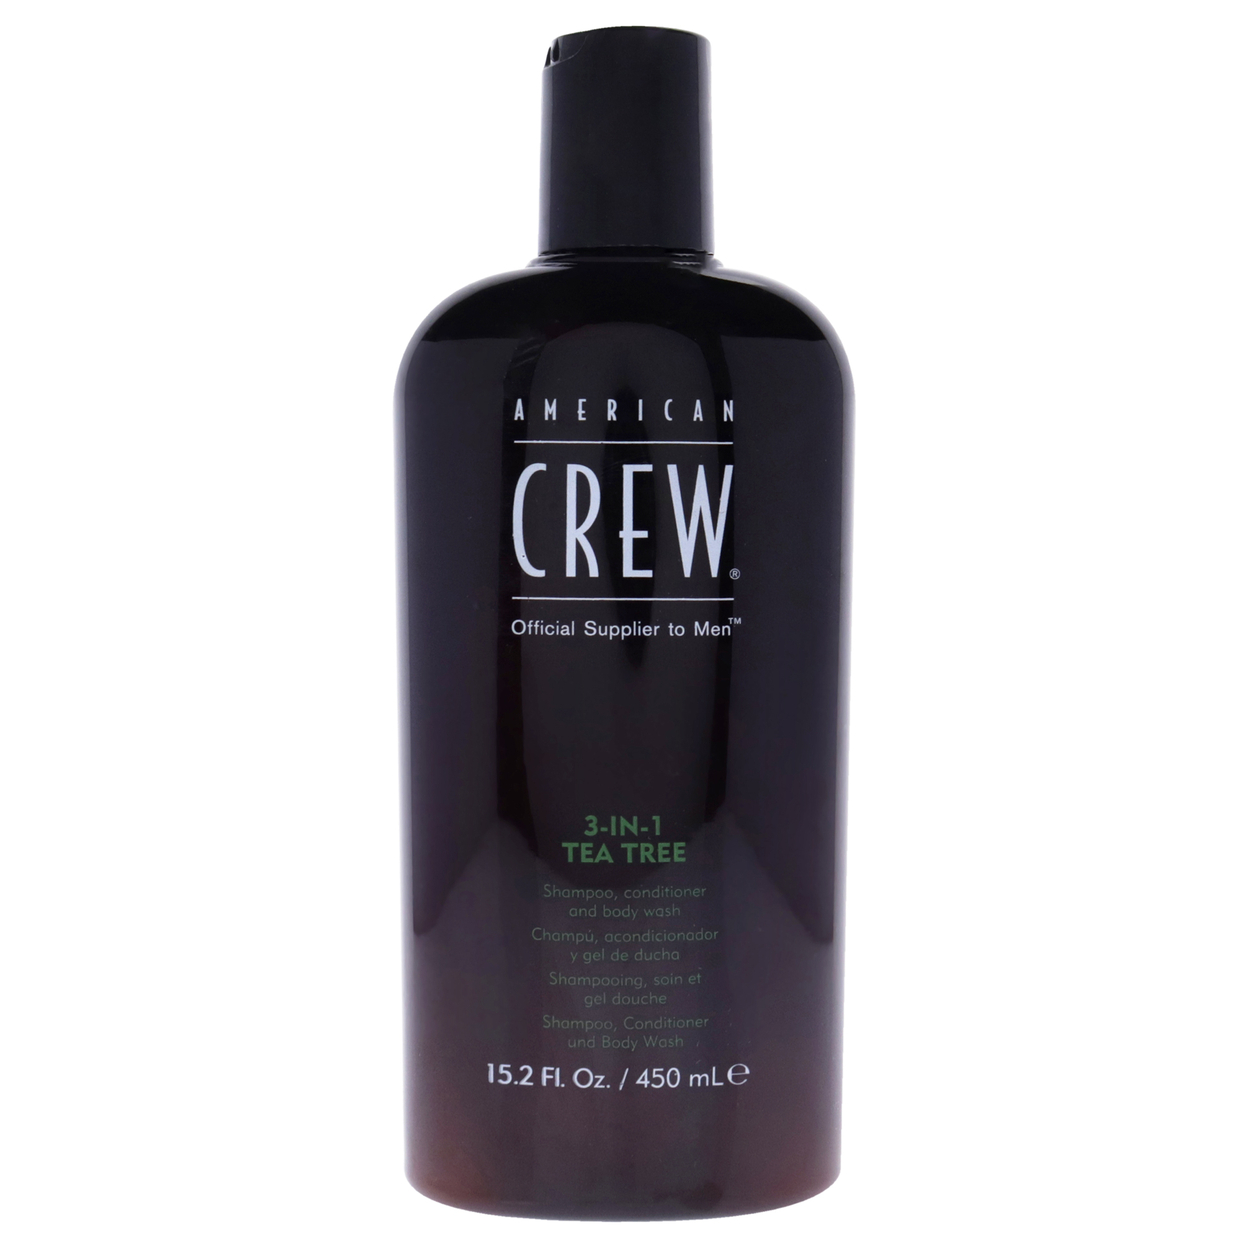 American Crew 3-In-1 Tea Tree Shampoo And Conditioner And Body Wash Shampoo, Conditoner And Body Wash 15.2 Oz